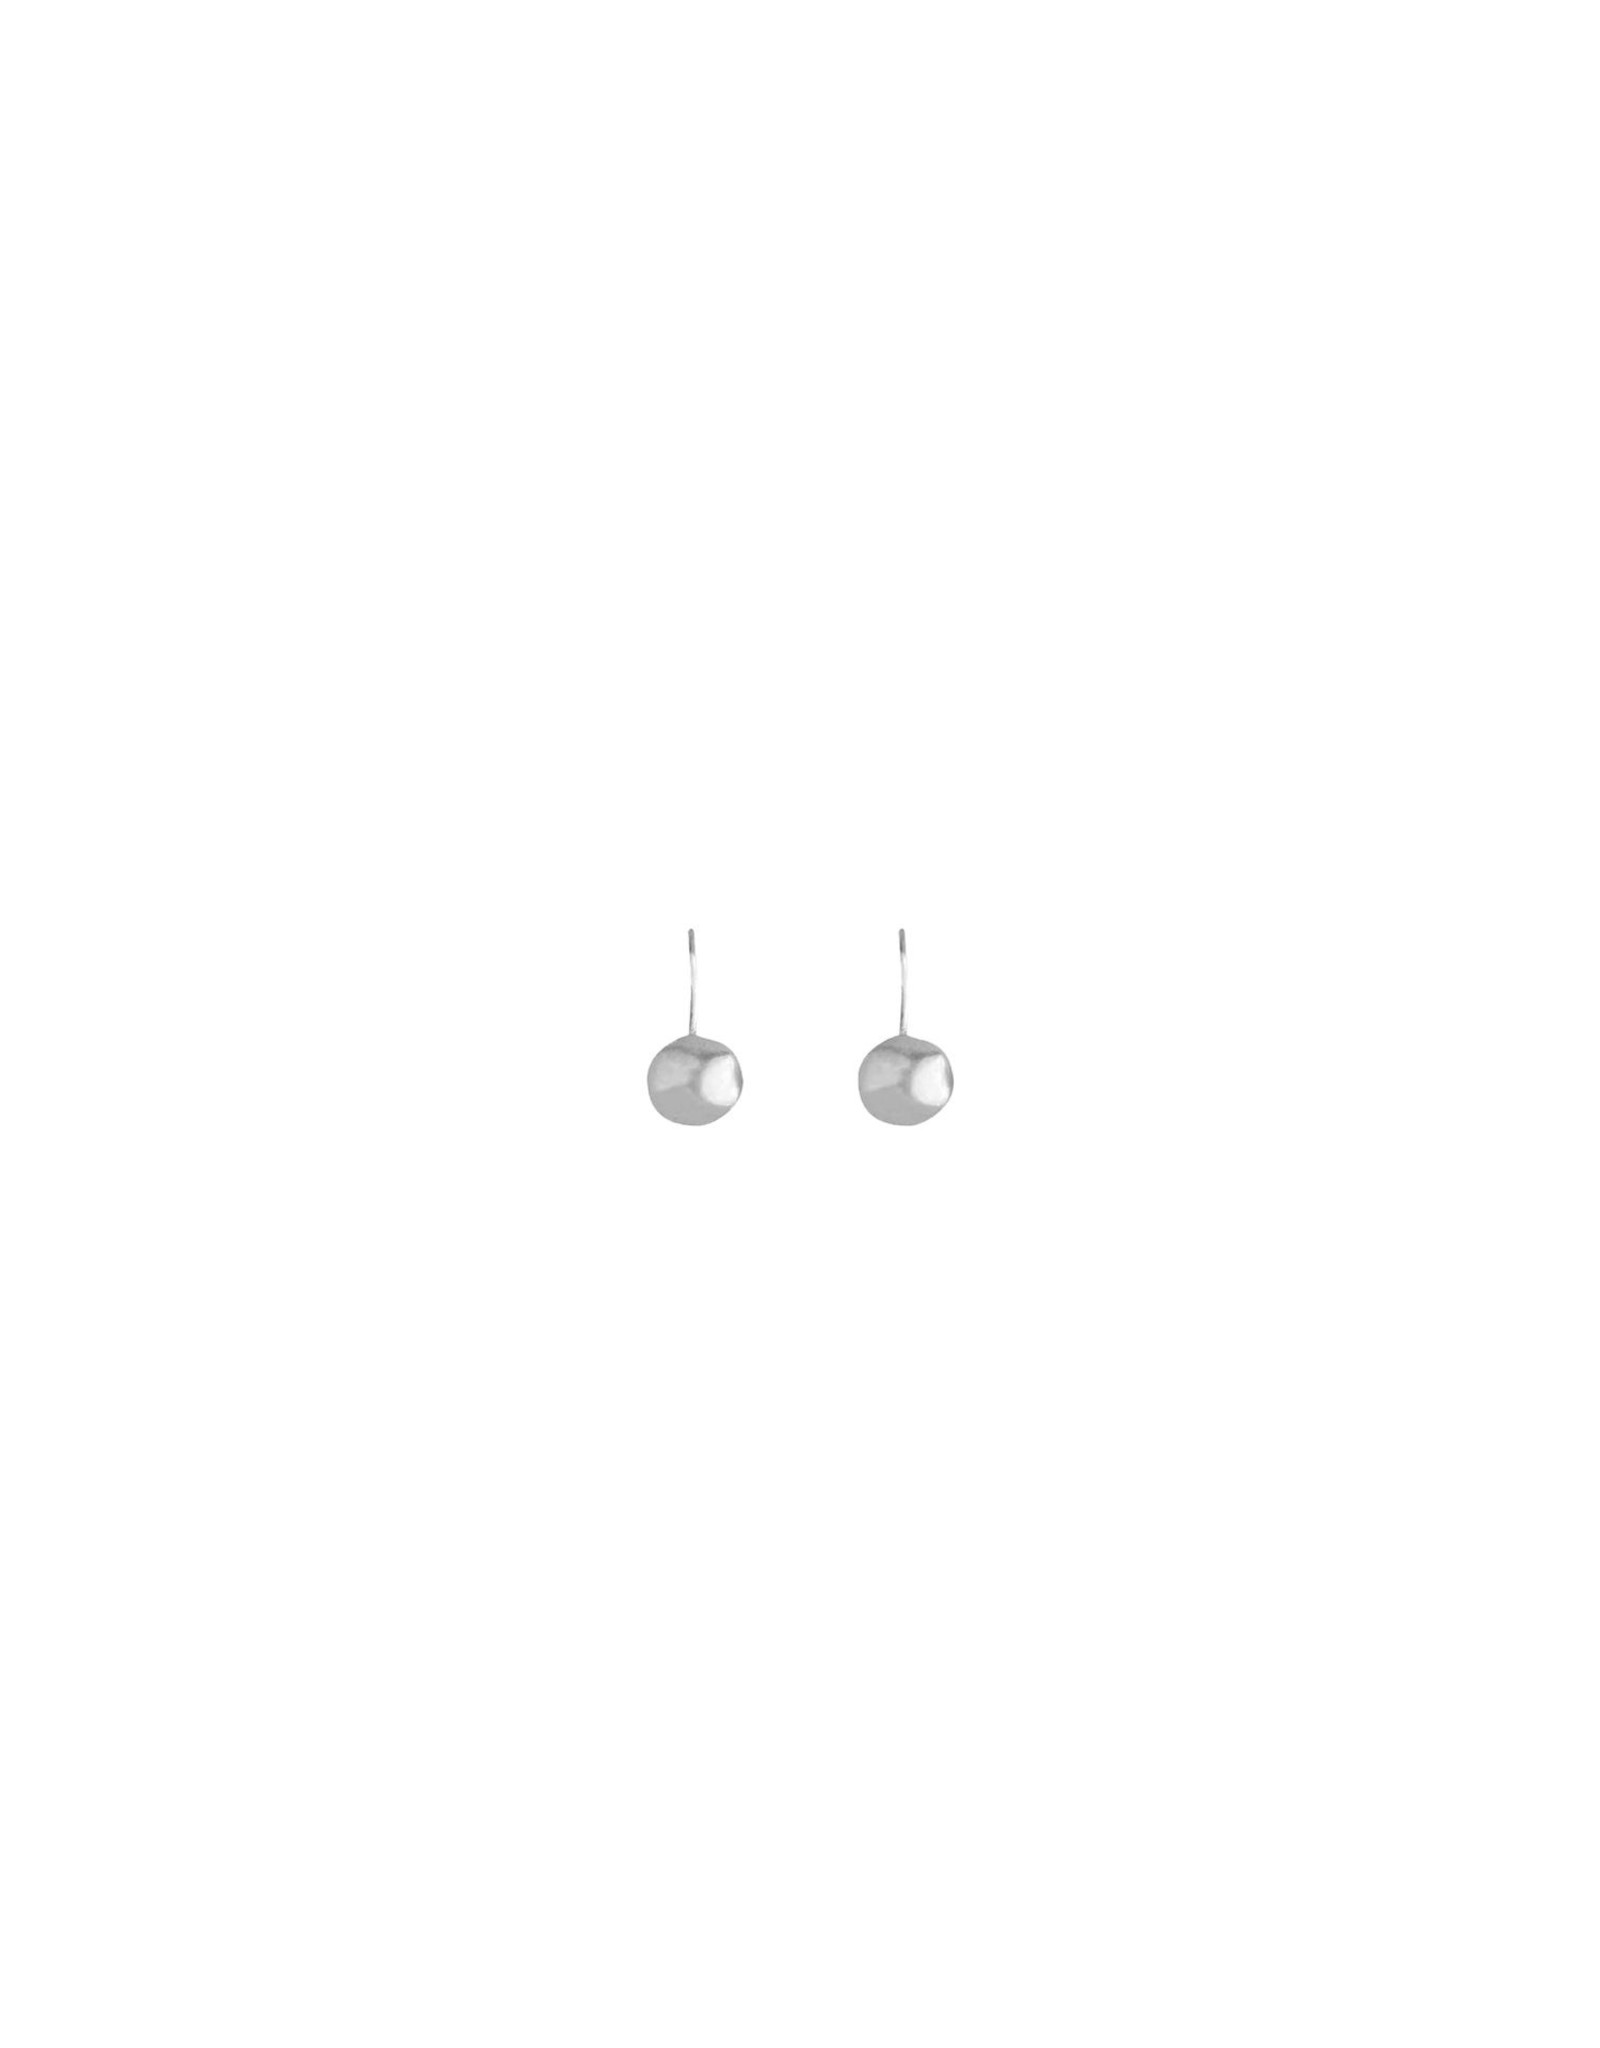 Uno de 50 Uno de 50 Pen0232mt Cerezuelas Cherries silver earrings